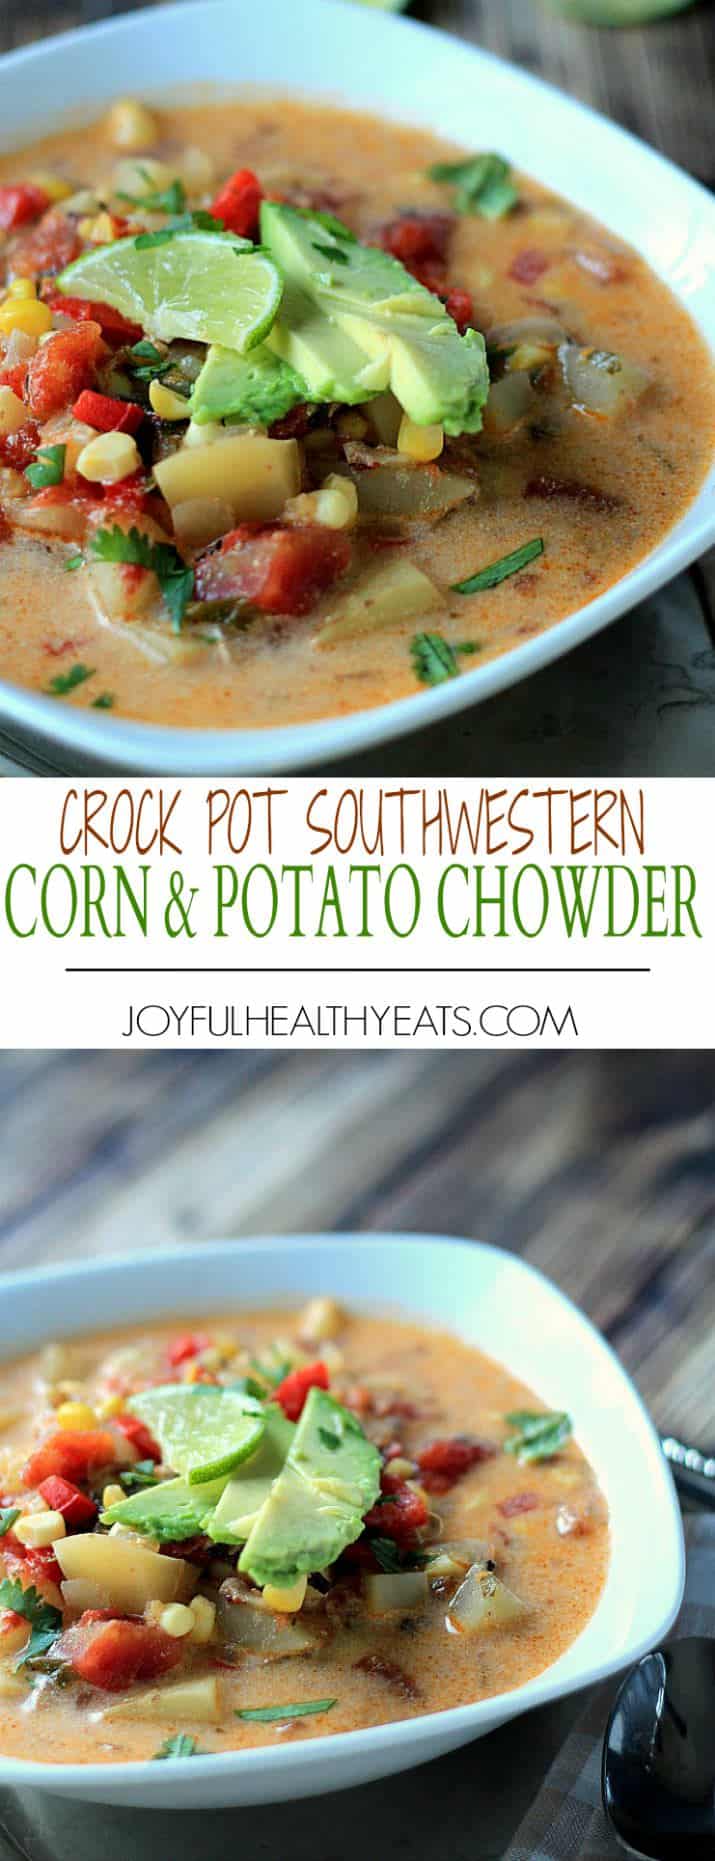 Collage for Crock Pot Southwestern Corn & Potato Chowder recipe